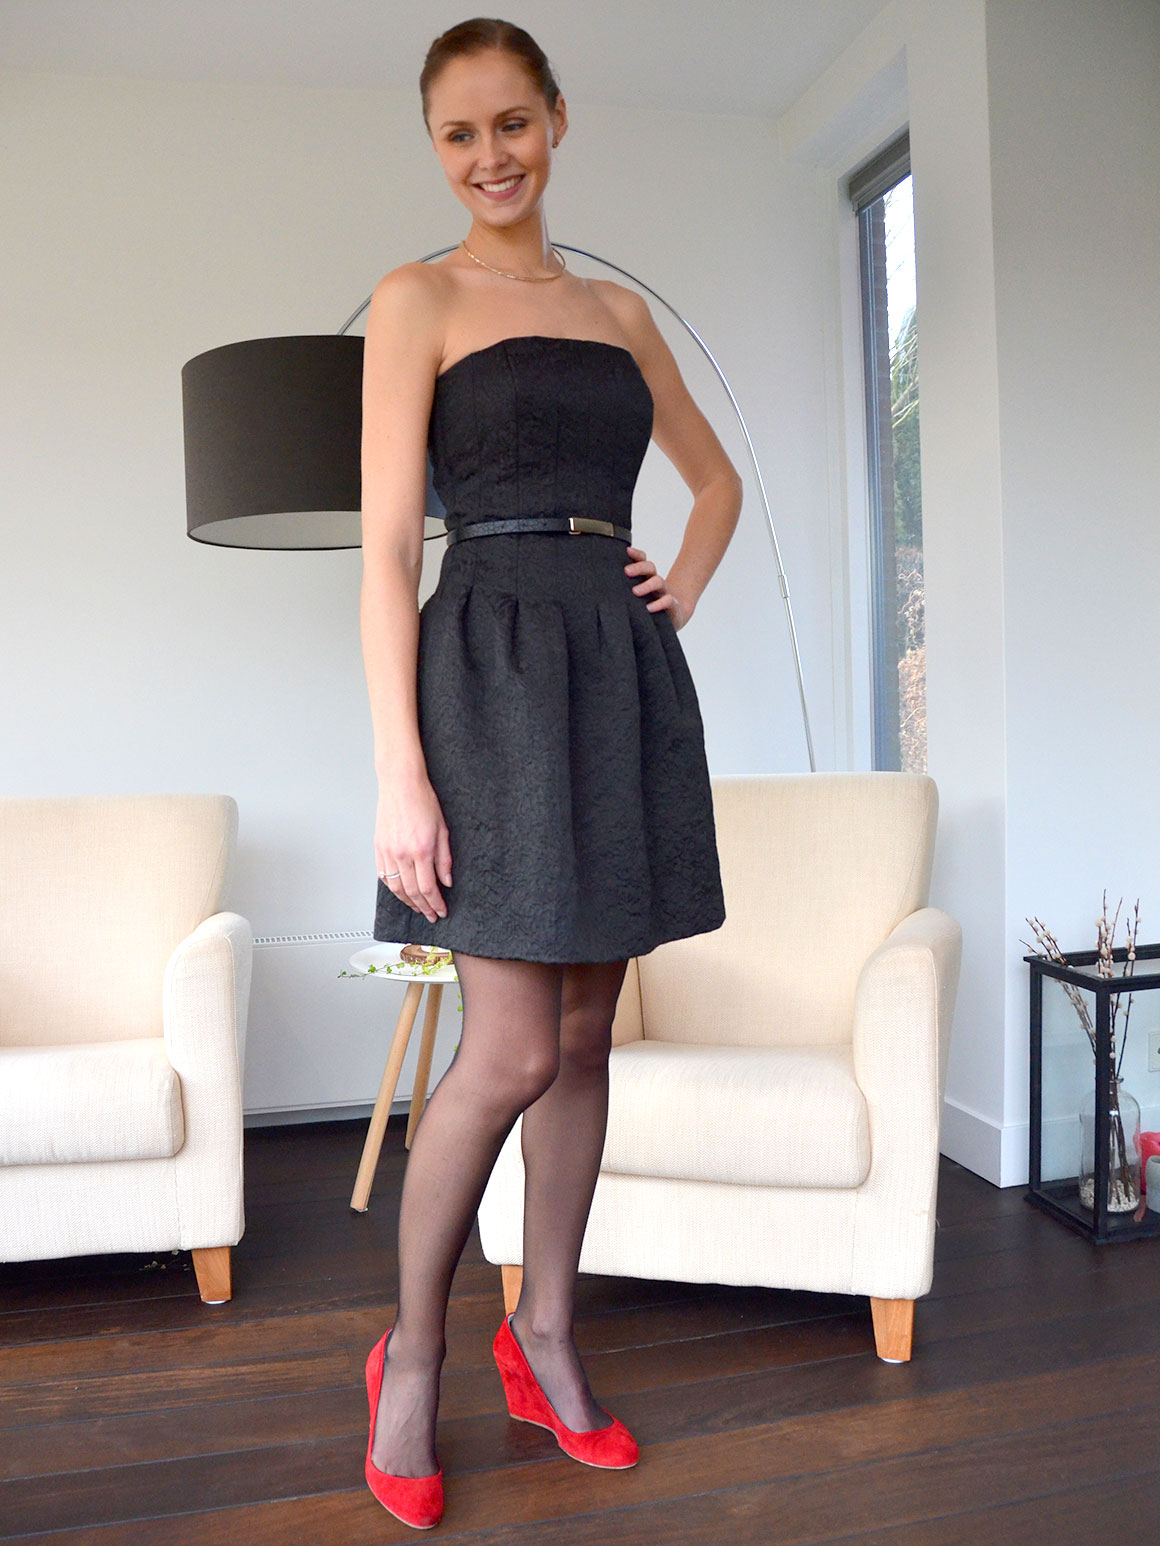 Outfit: Little black dress